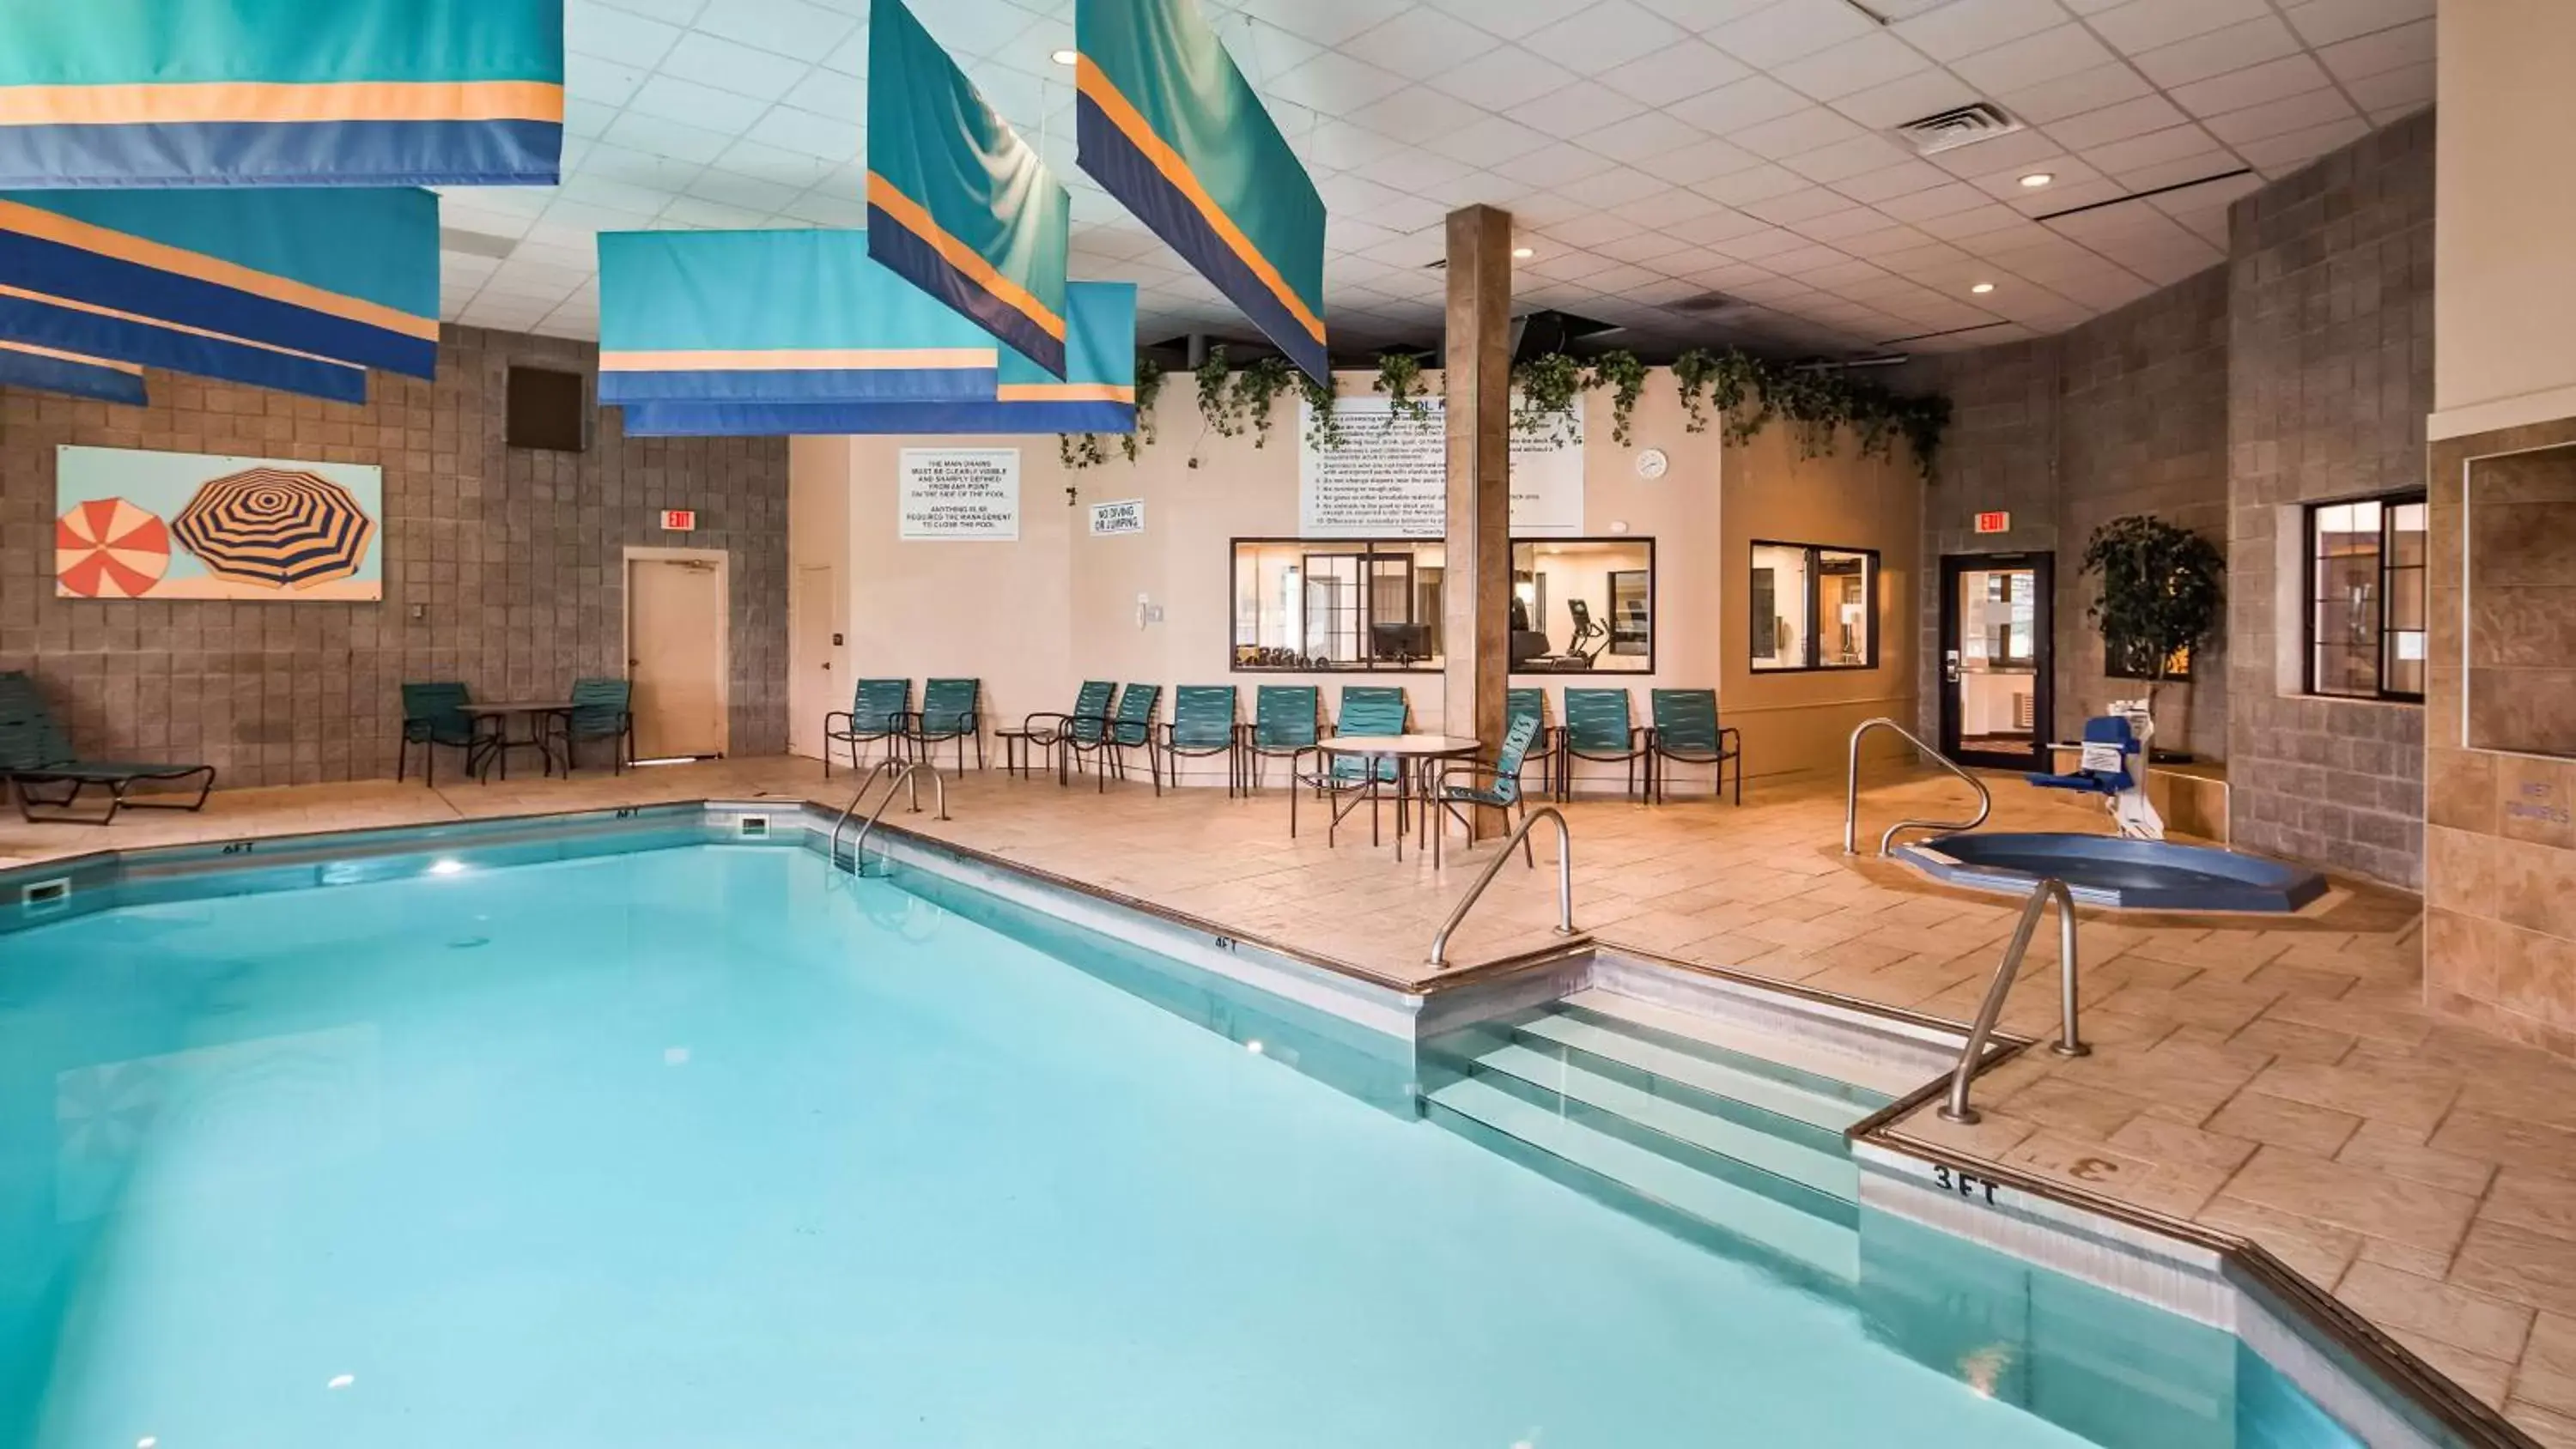 On site, Swimming Pool in Best Western Plus Butte Plaza Inn